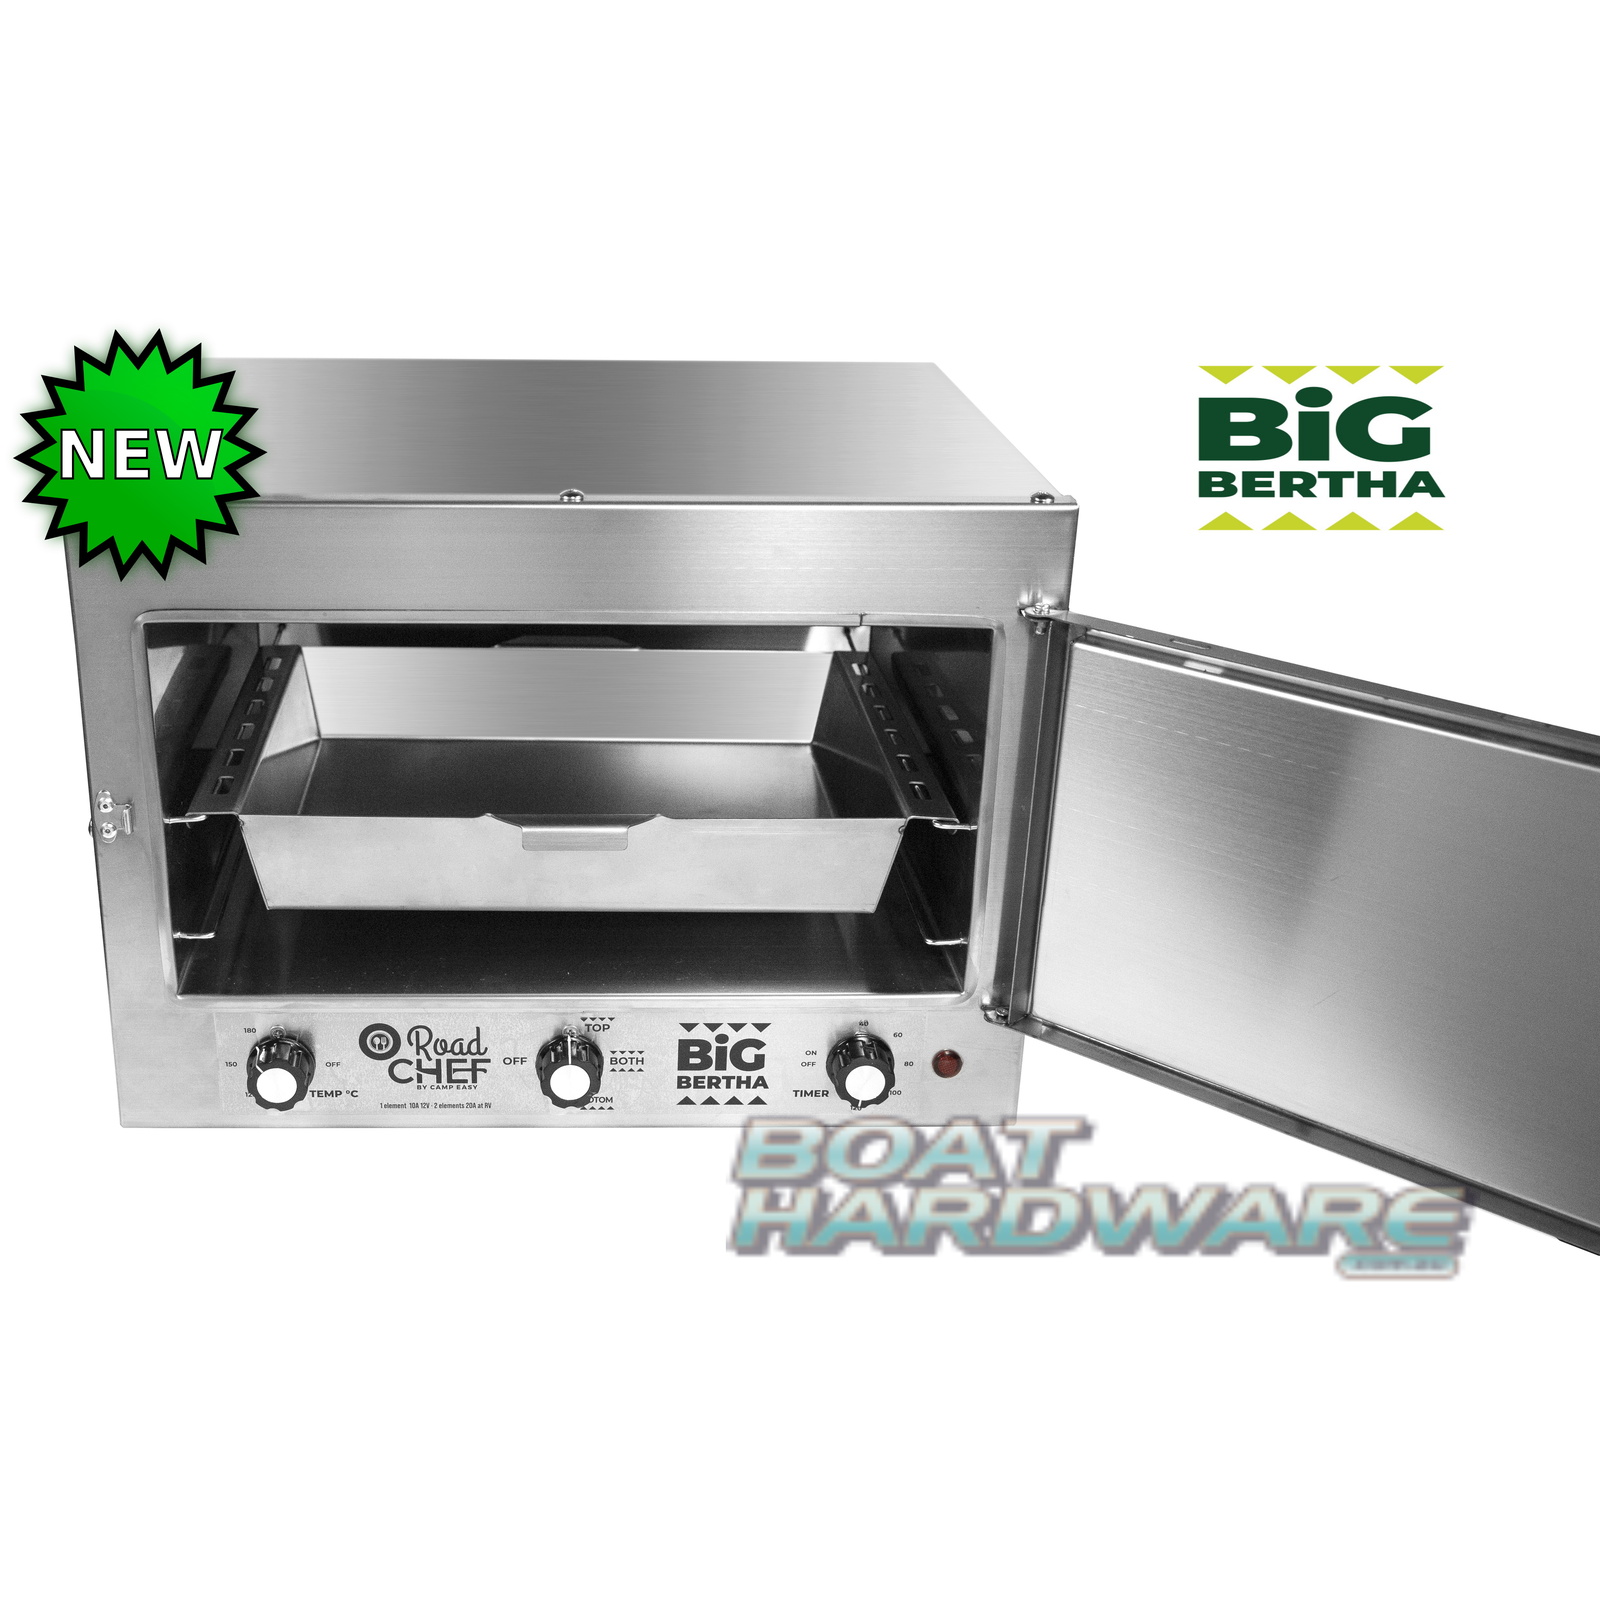 NEW Big Bertha 13L Road Chef 12V Travel Oven